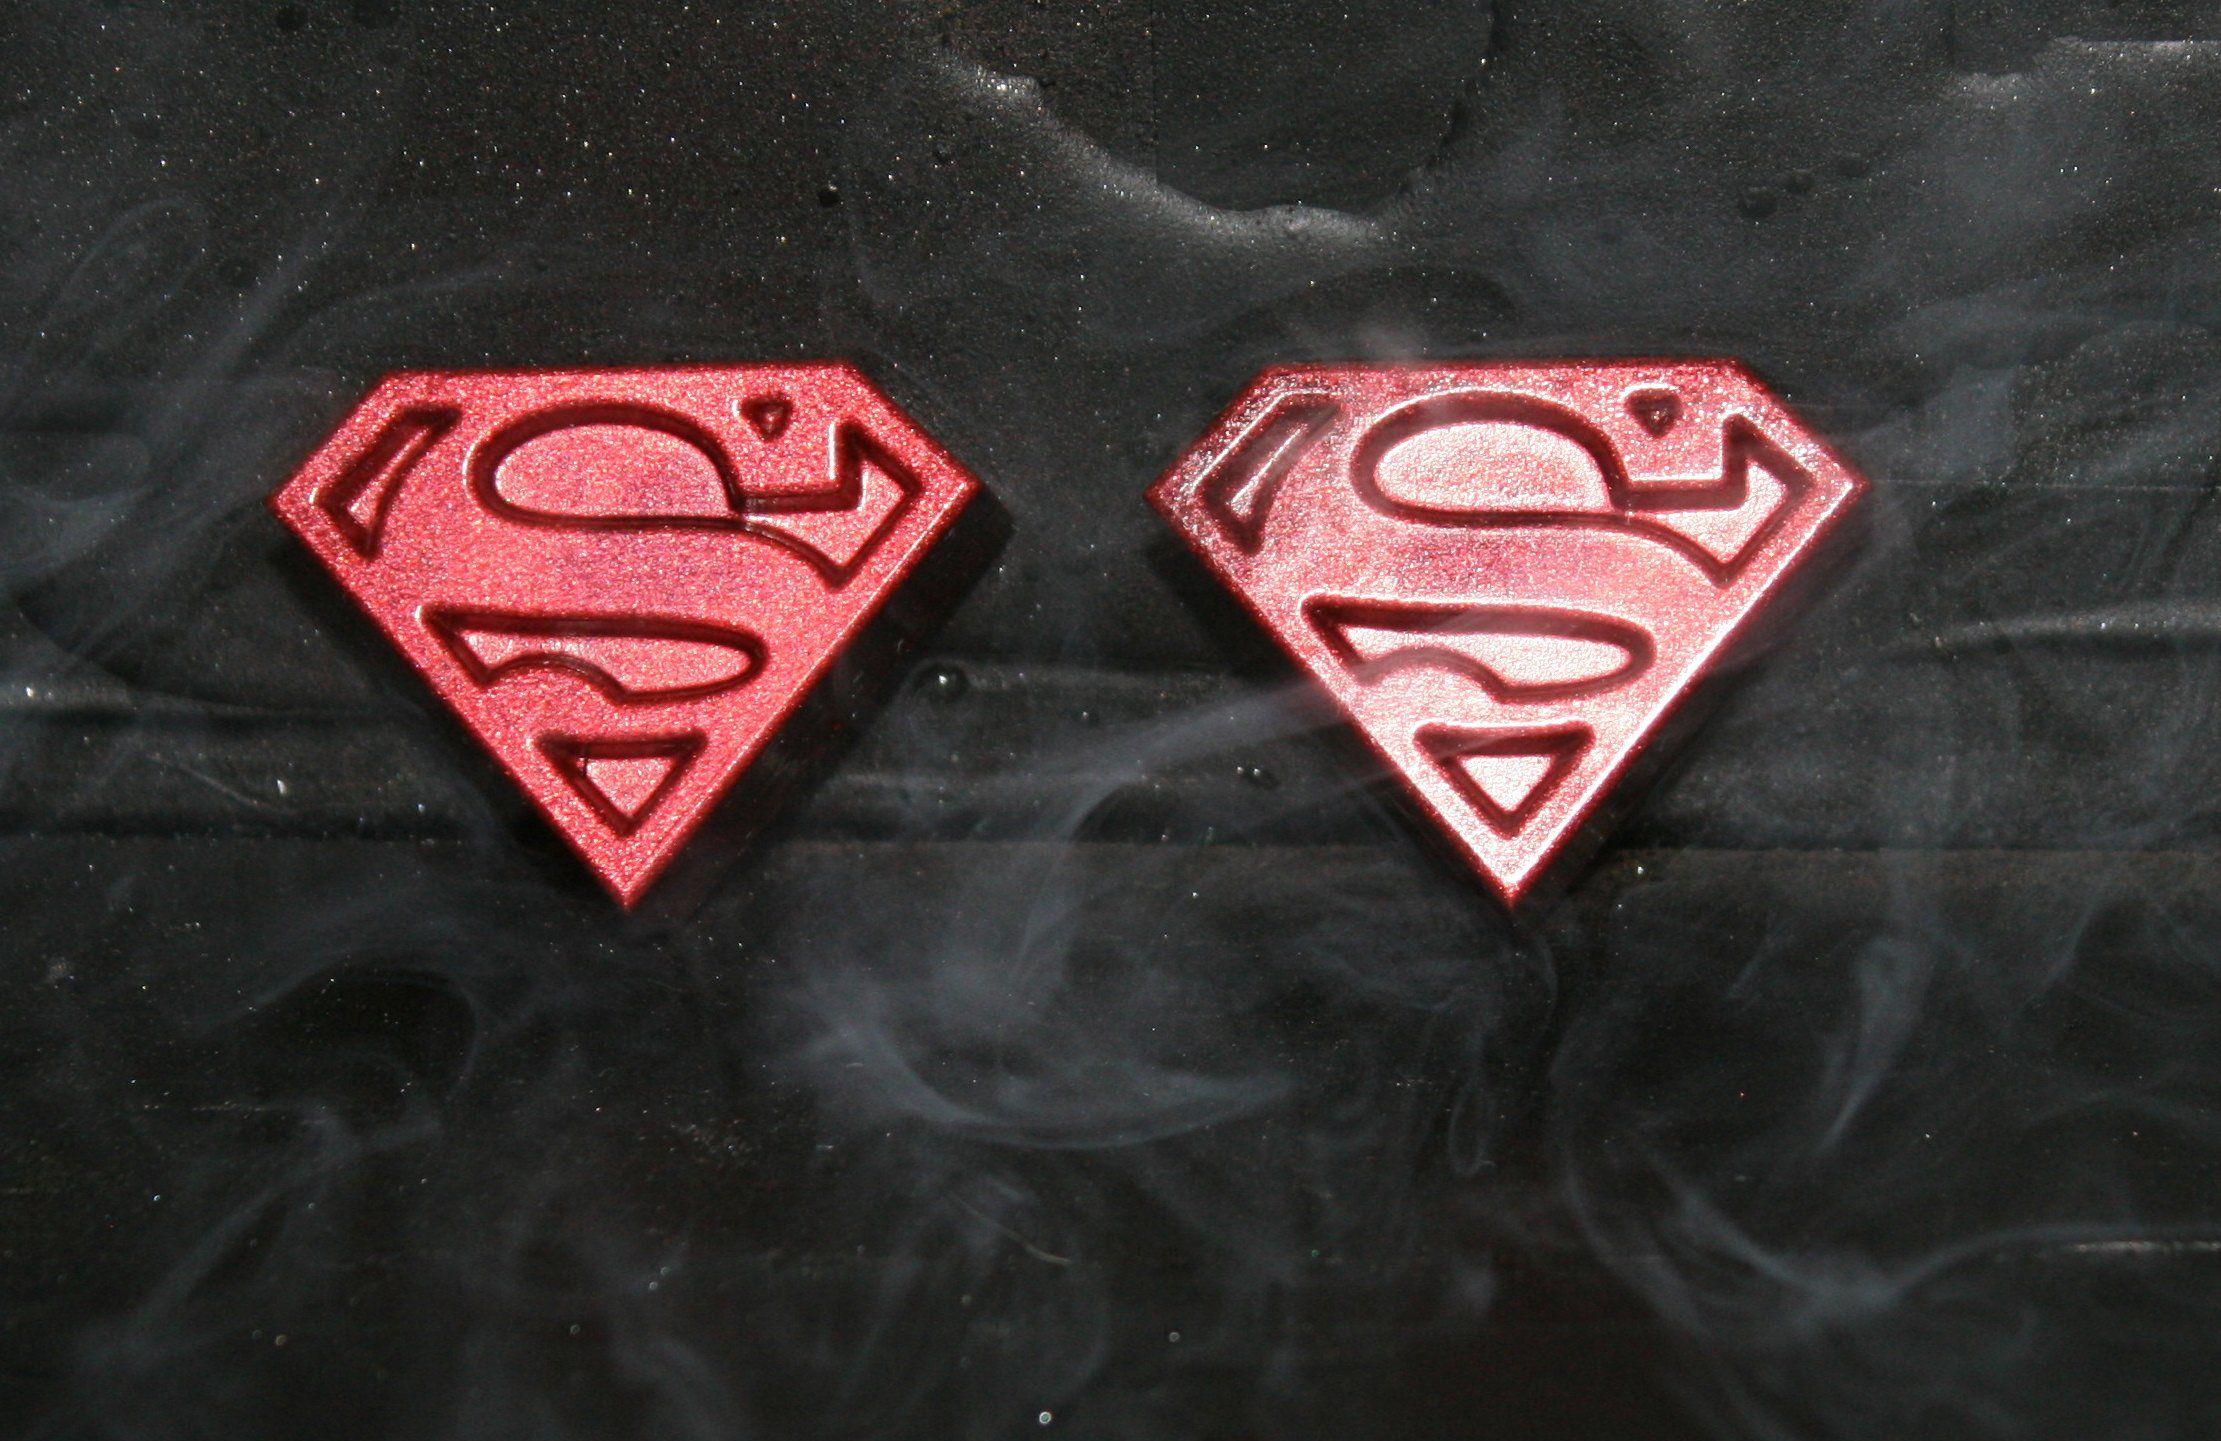 Glow in the Dark Superman Logo - Hand Made Superman Symbol Glow in the Dark Resin Toy Figures